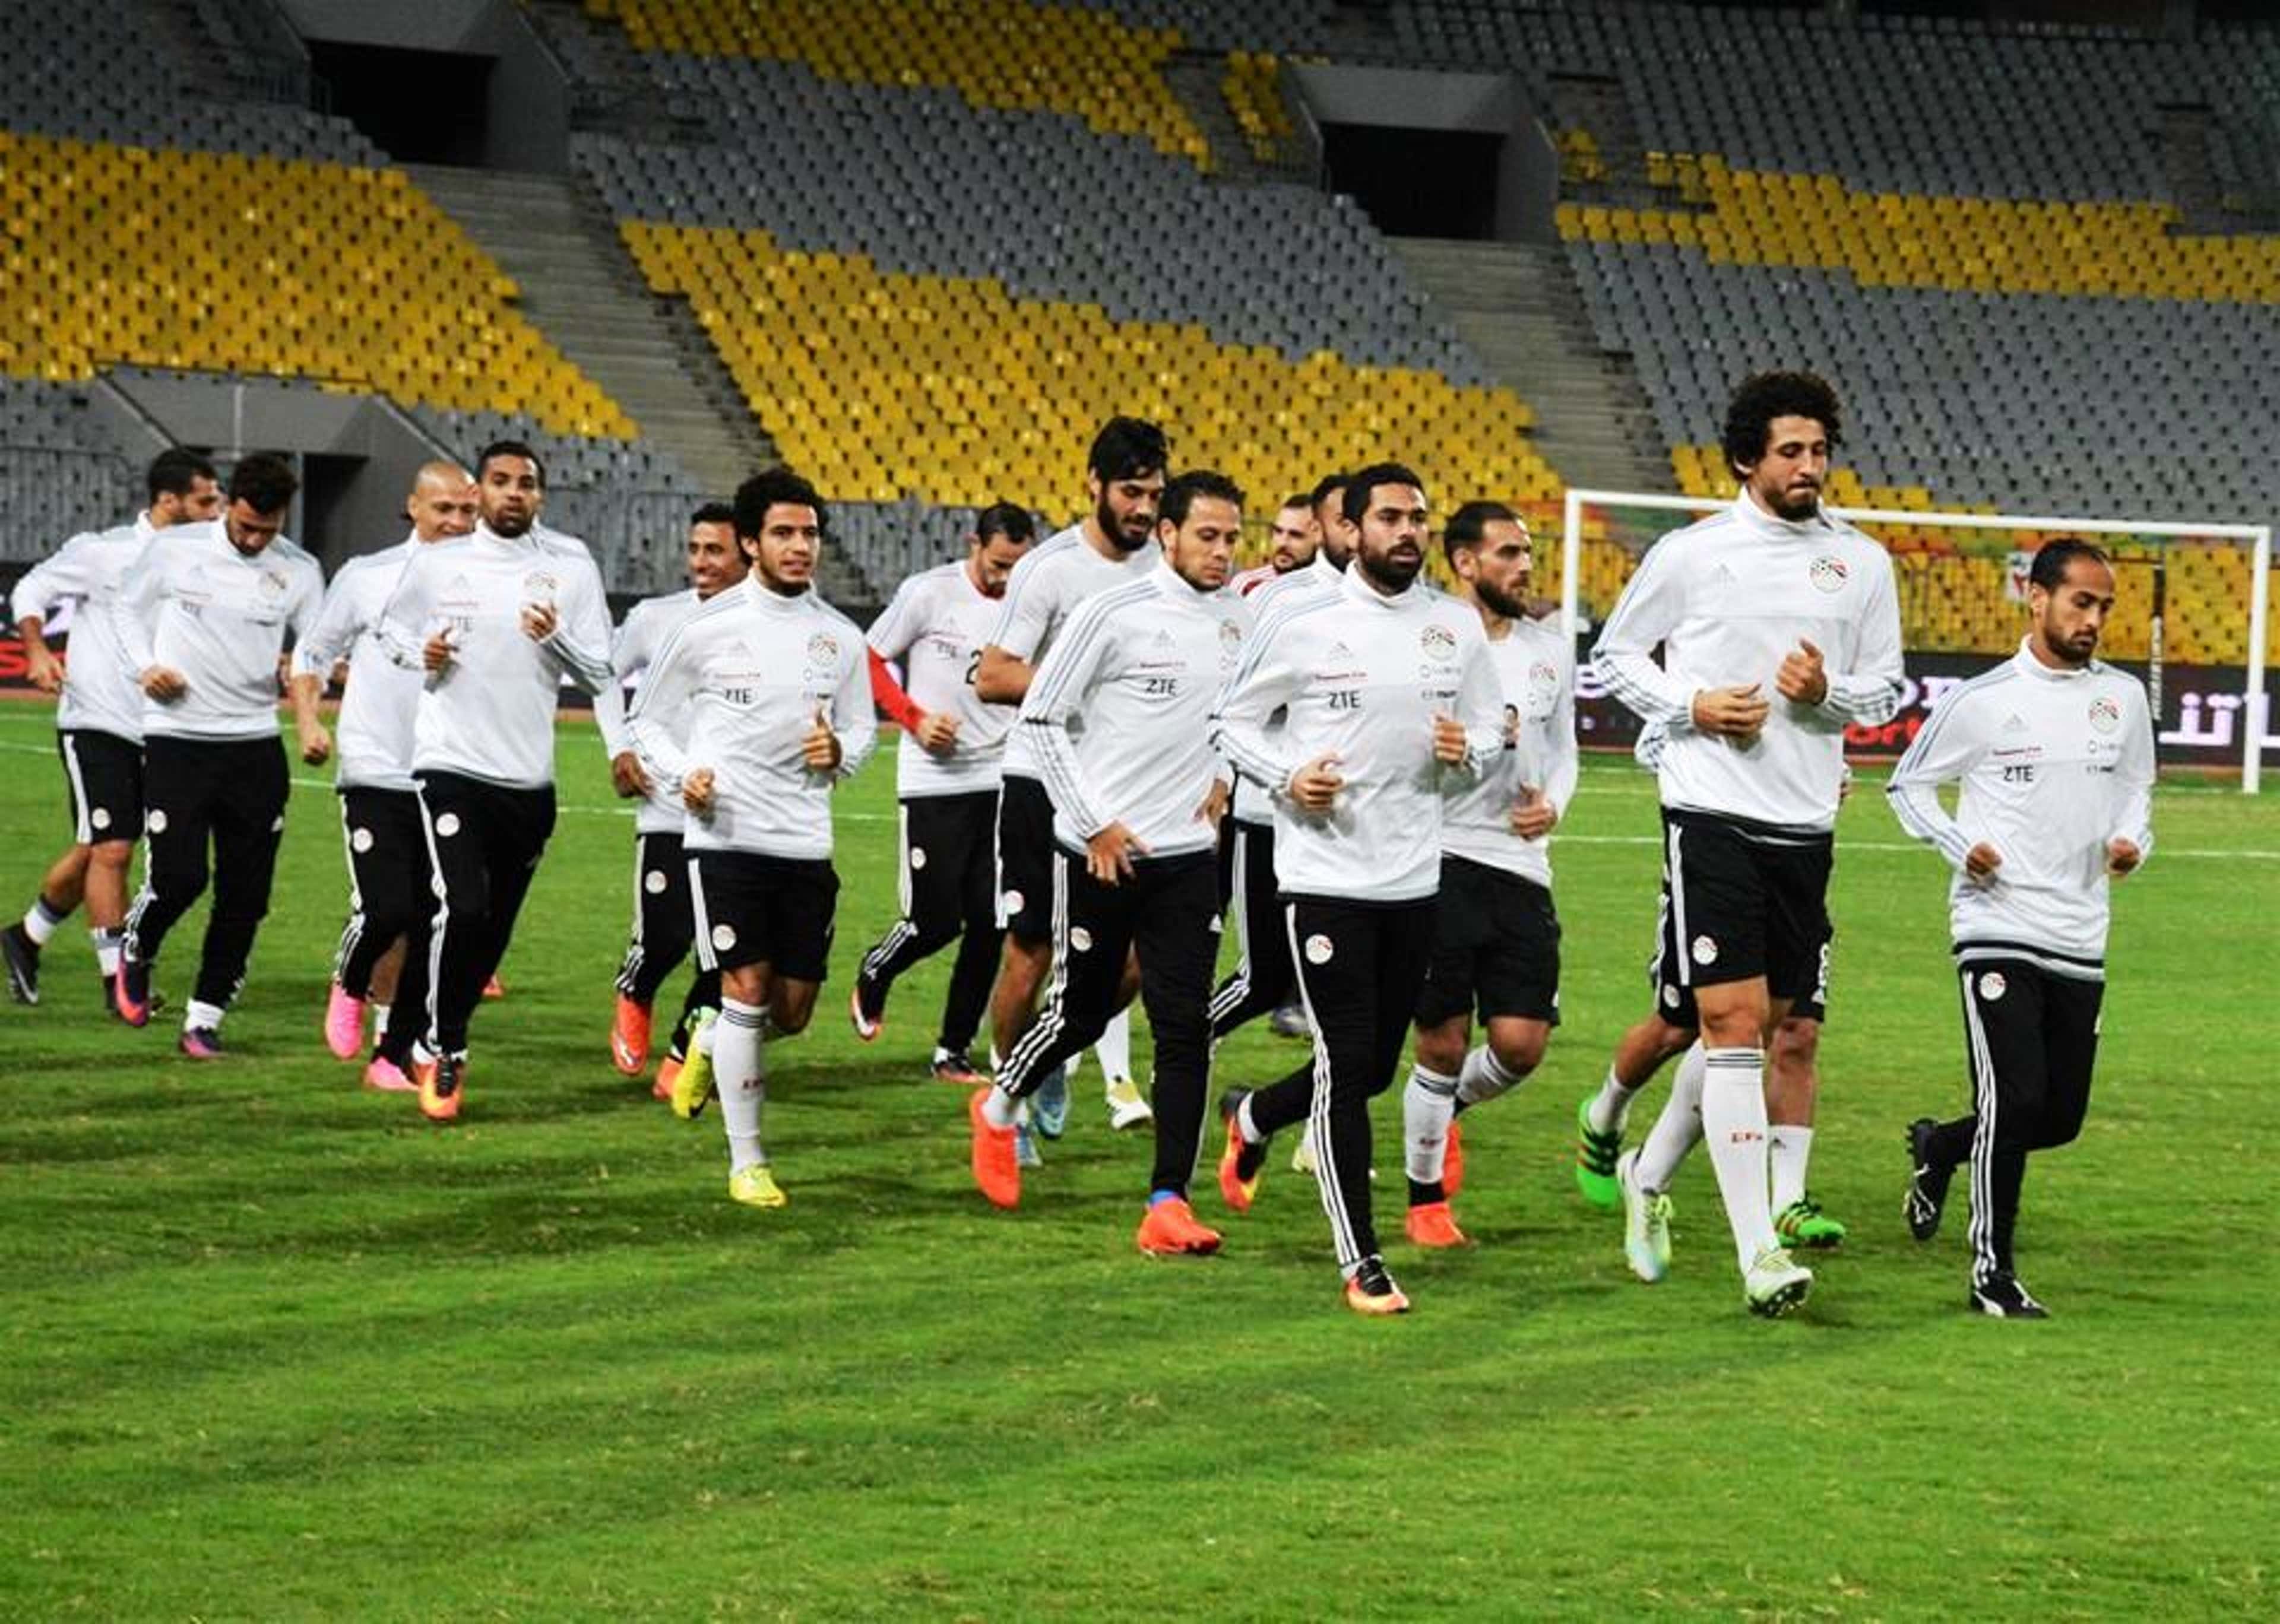 egyptian national team training - 11-11-2016